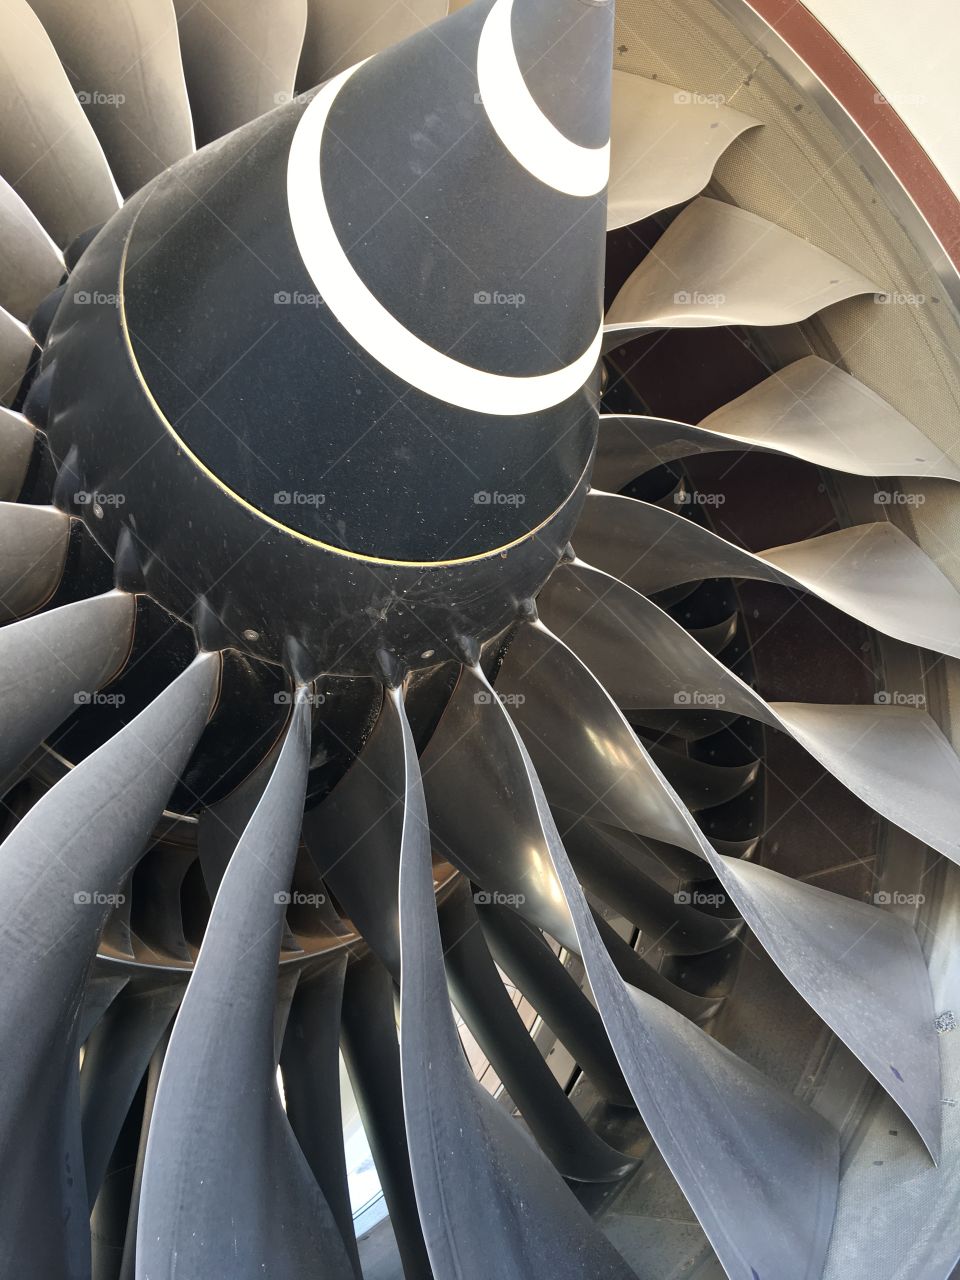 Dreamliner GENx engine fan blades